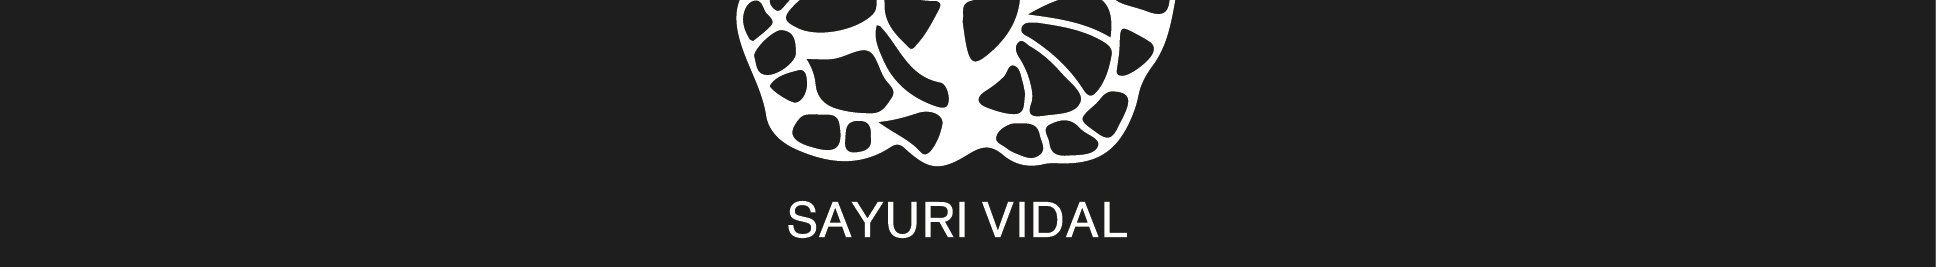 Sayuri Vidal's profile banner